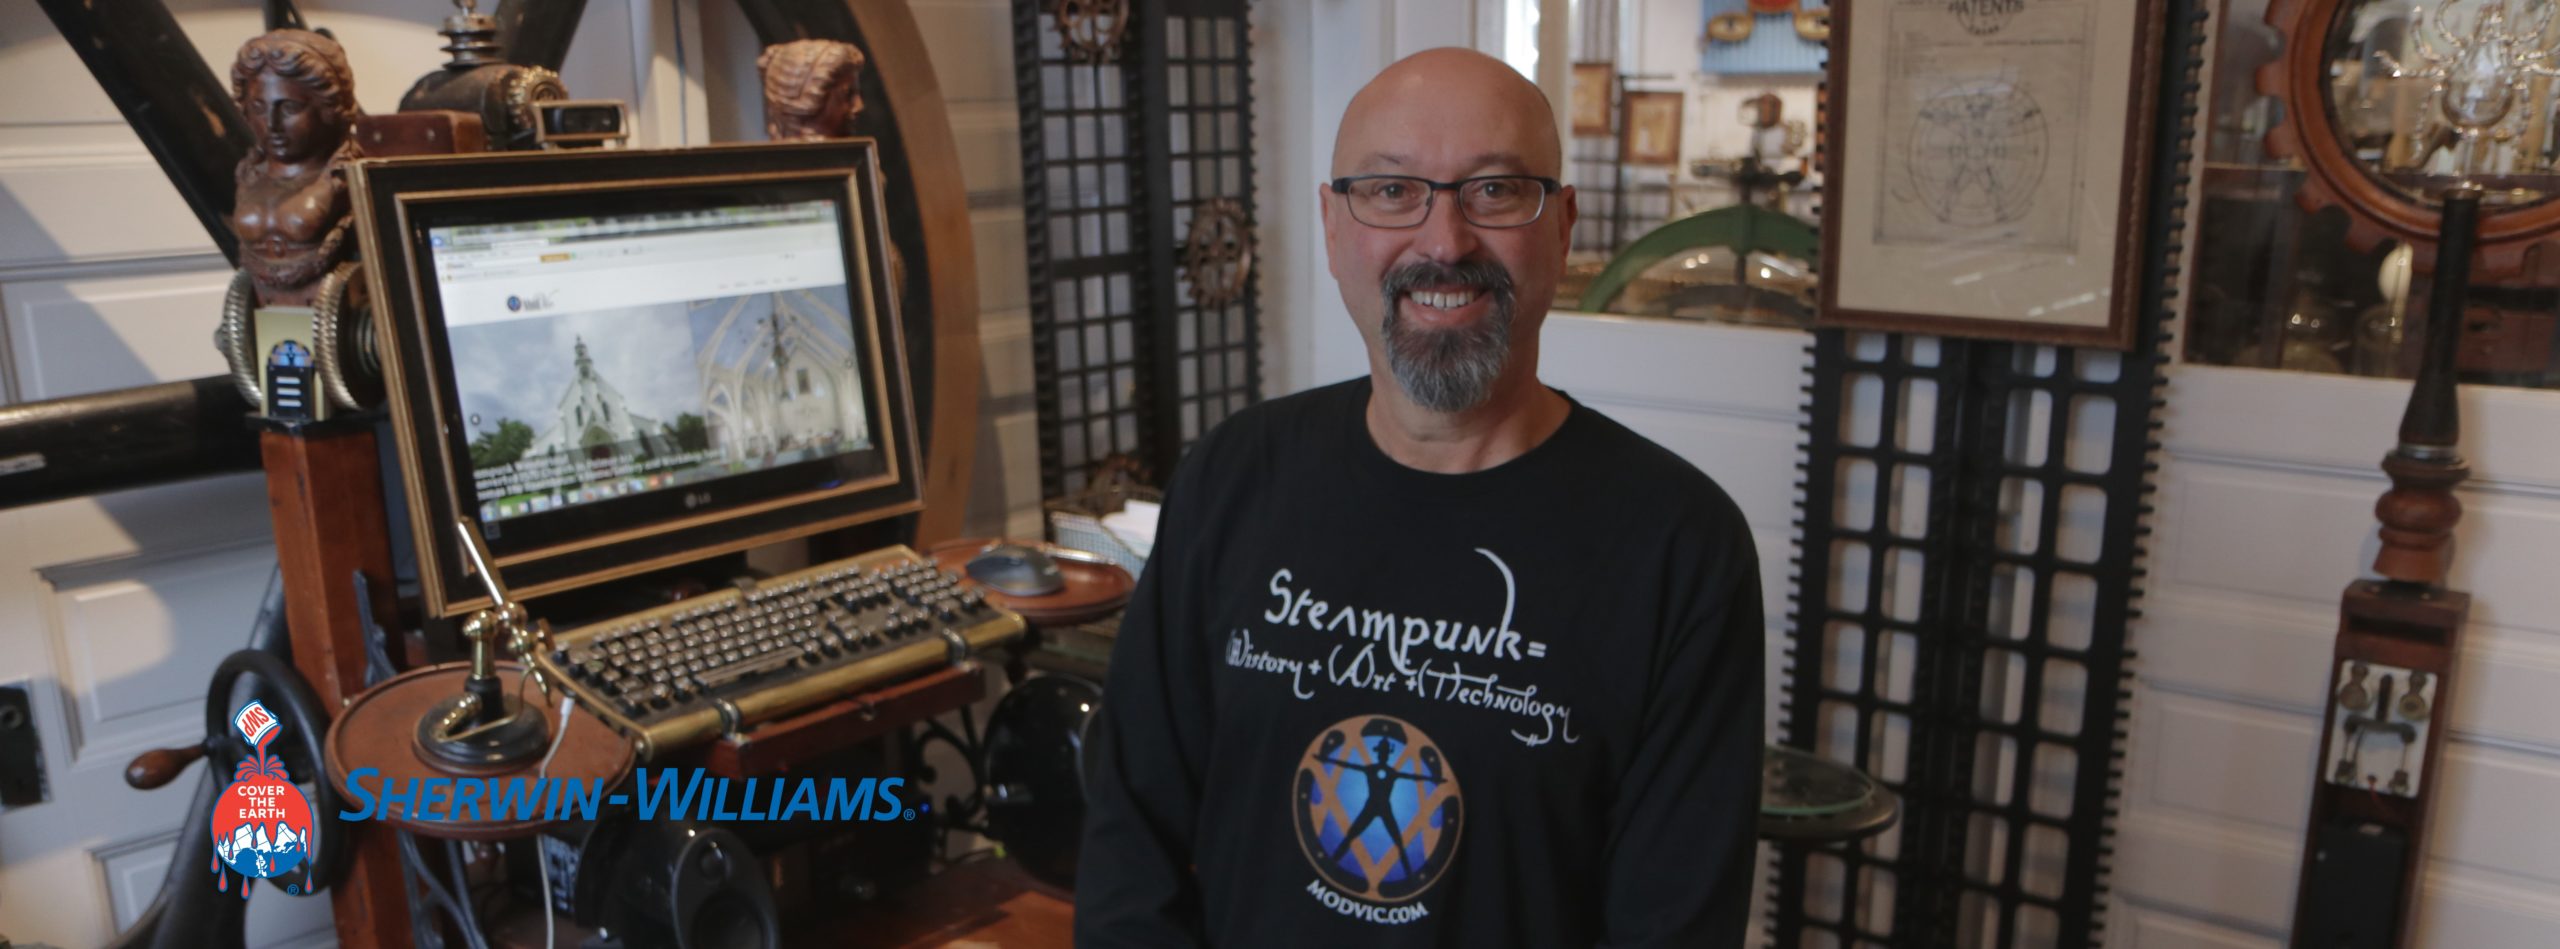 Featured image for “STIR® and Bruce Rosenbaum discuss steampunk”